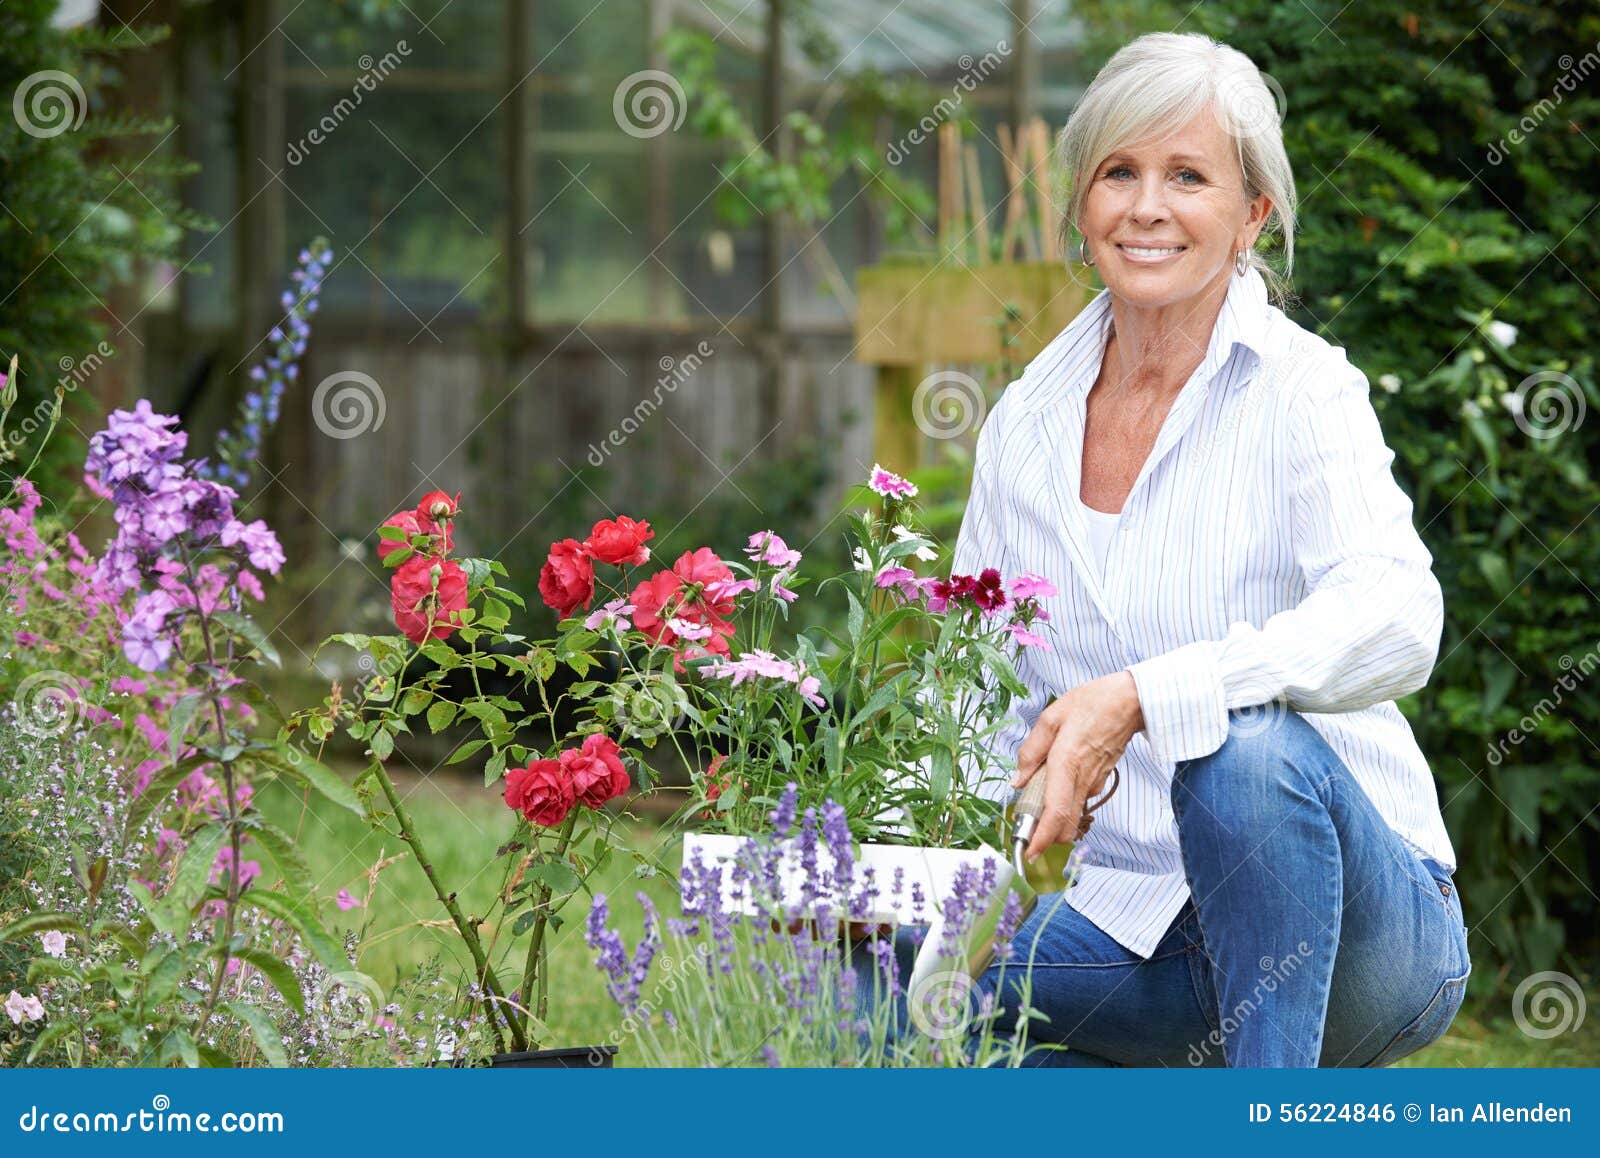 portrait of mature woman gardening